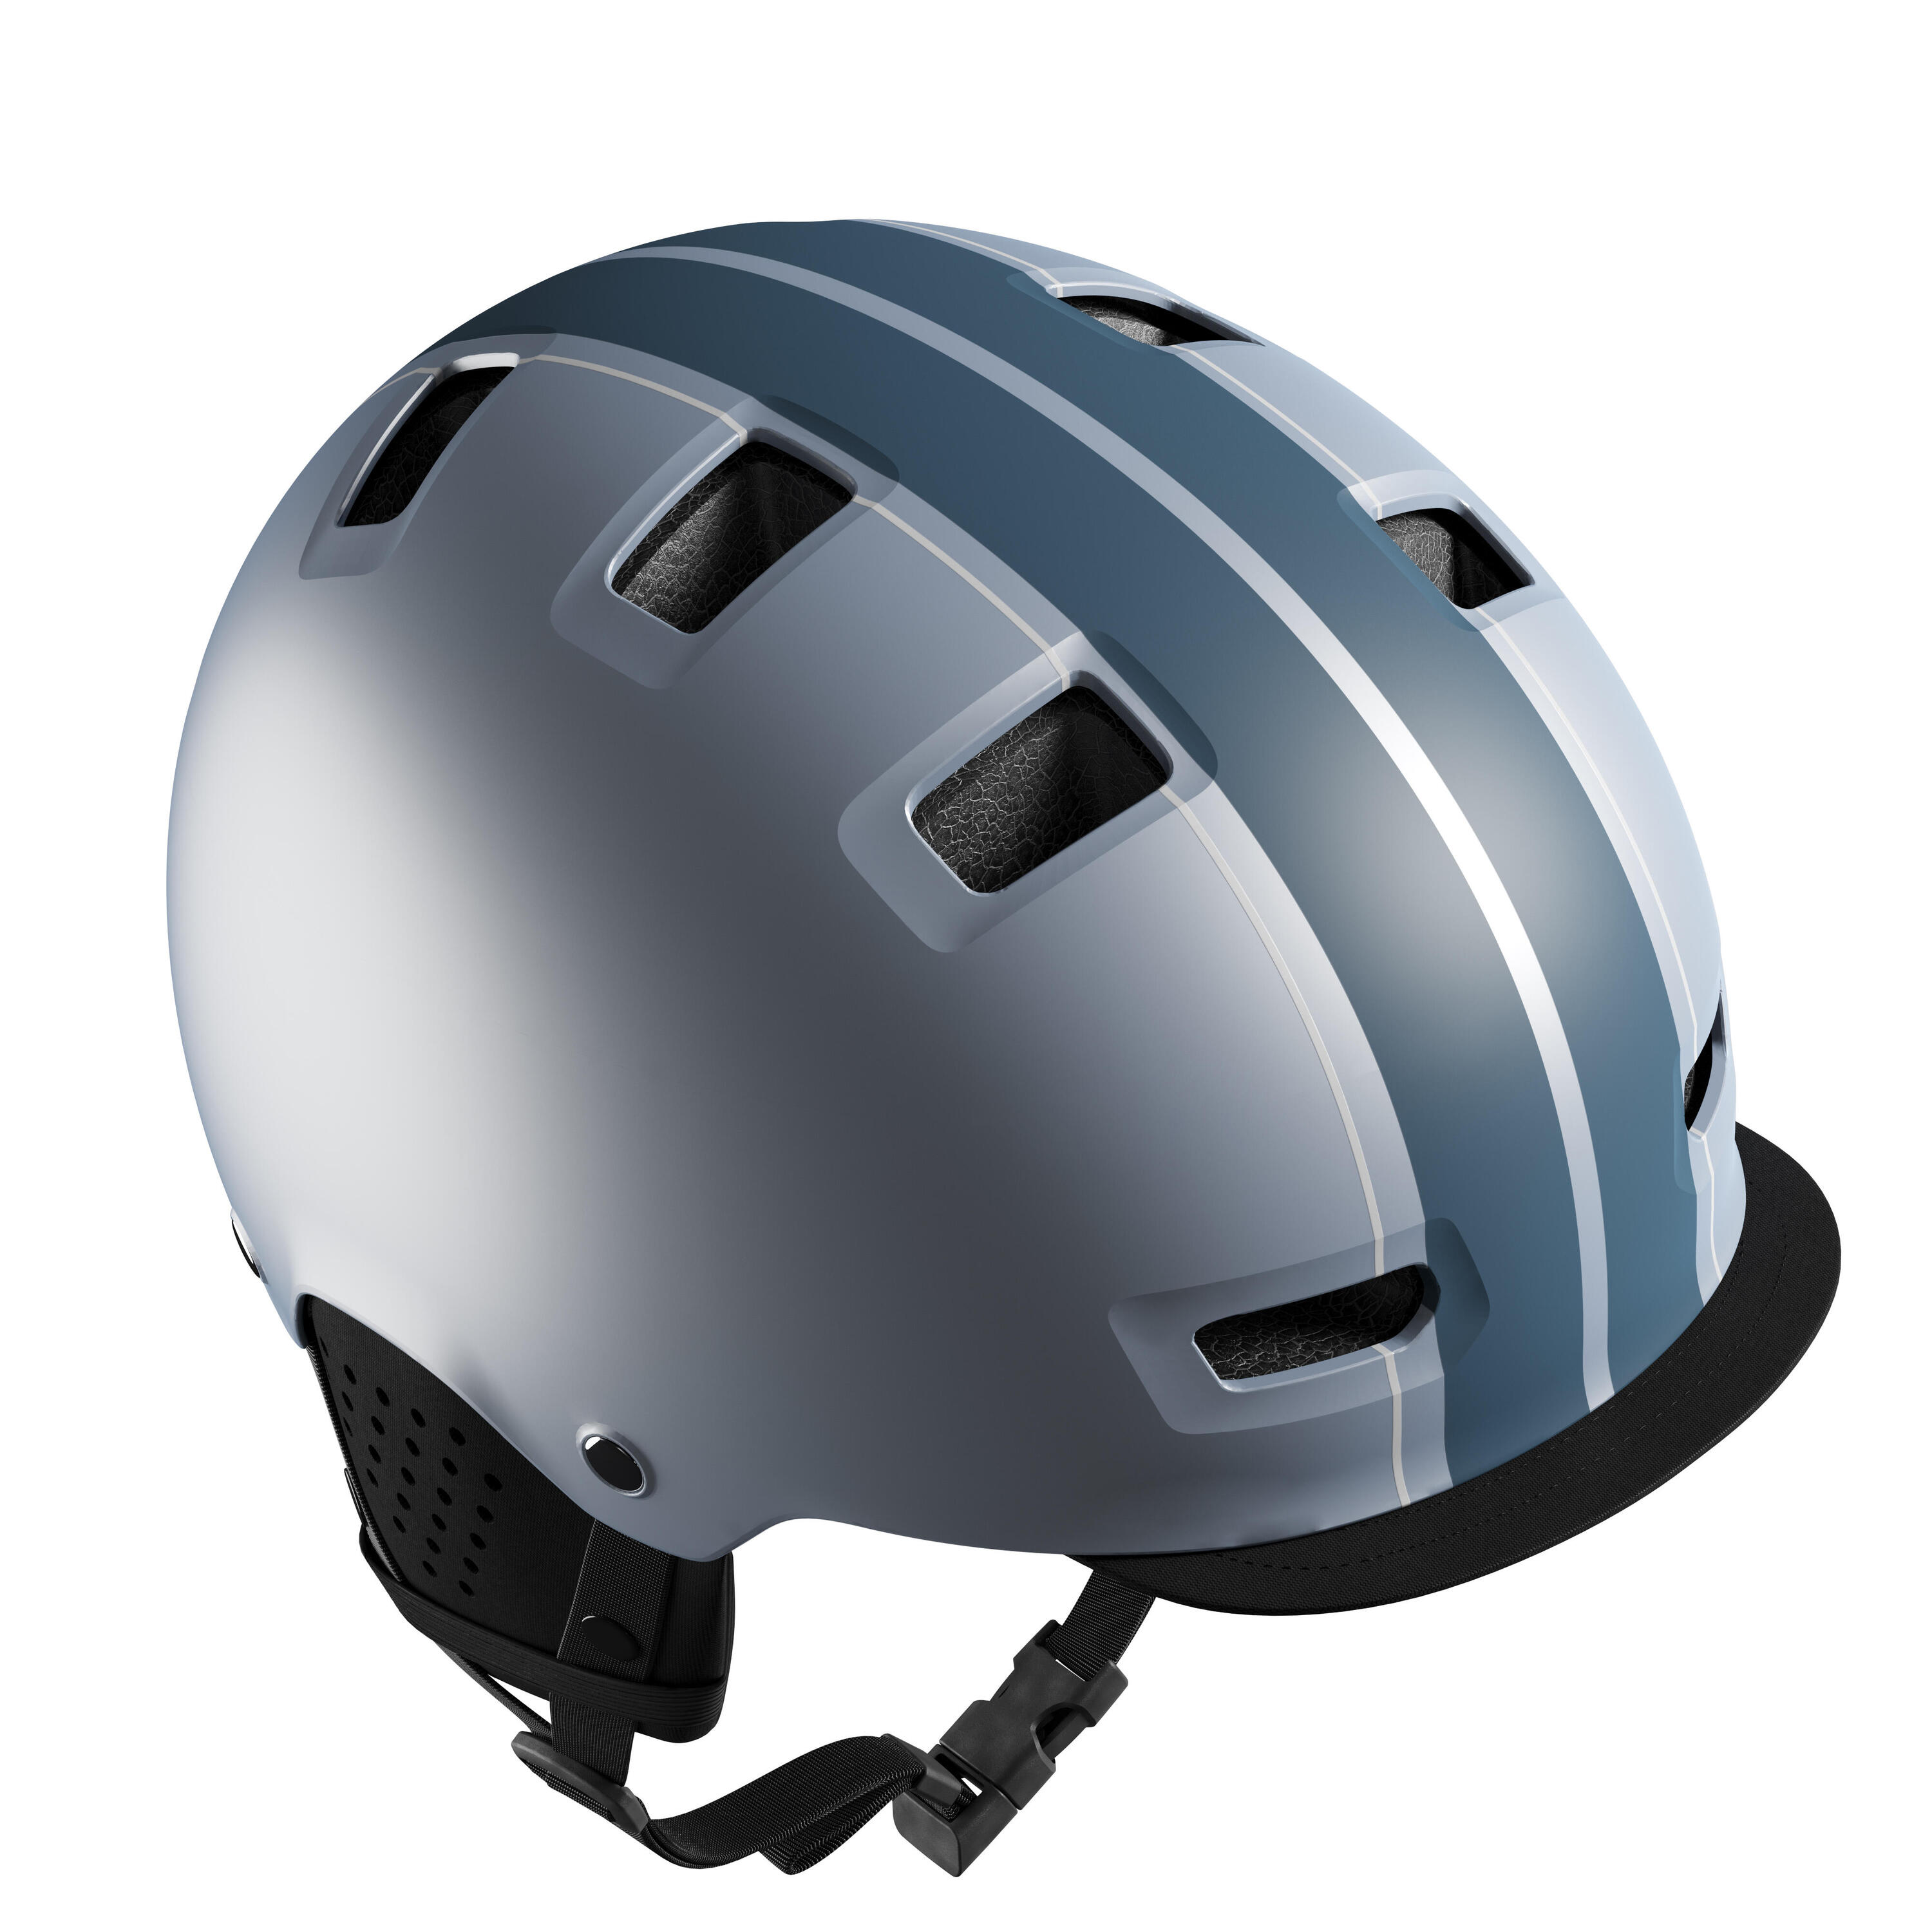 BTWIN Cycling Bowl City Bike Helmet 500 - Graphic Blue